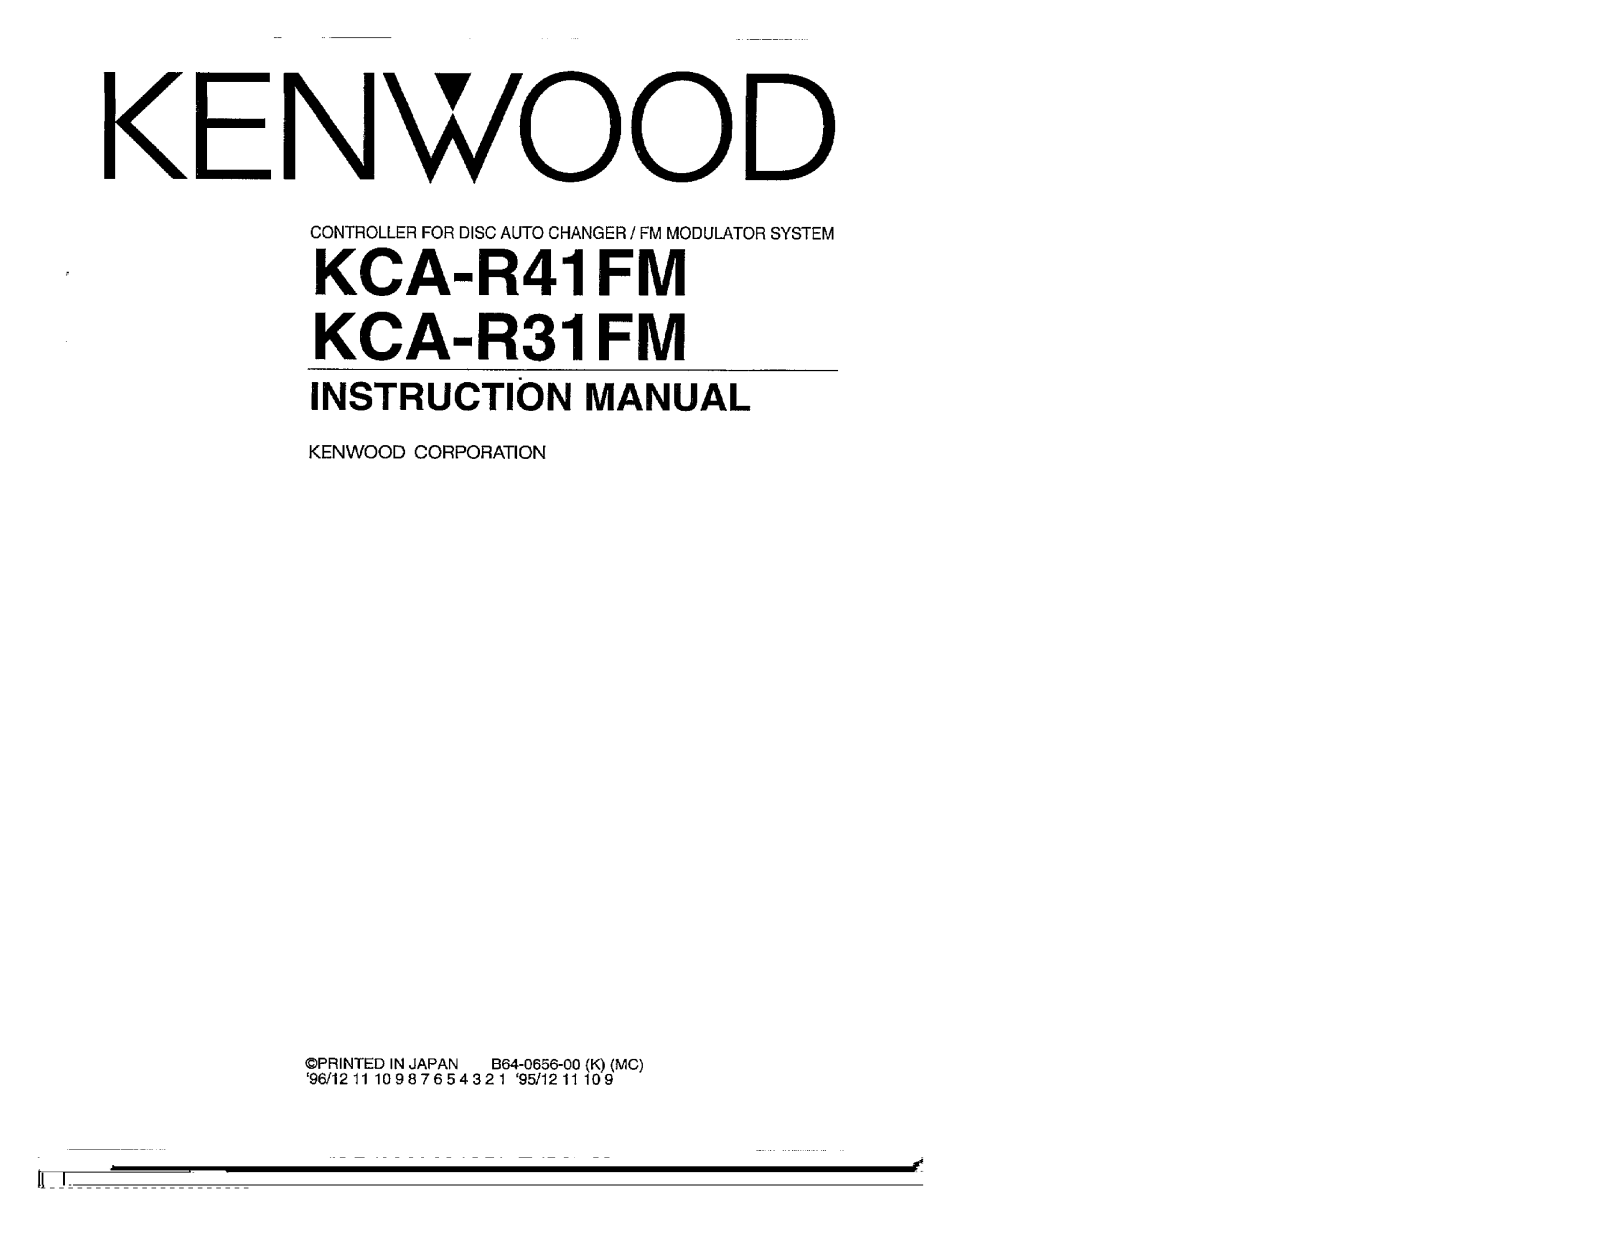 Kenwood KCA-R41FM, KCA-R31FM Owner's Manual